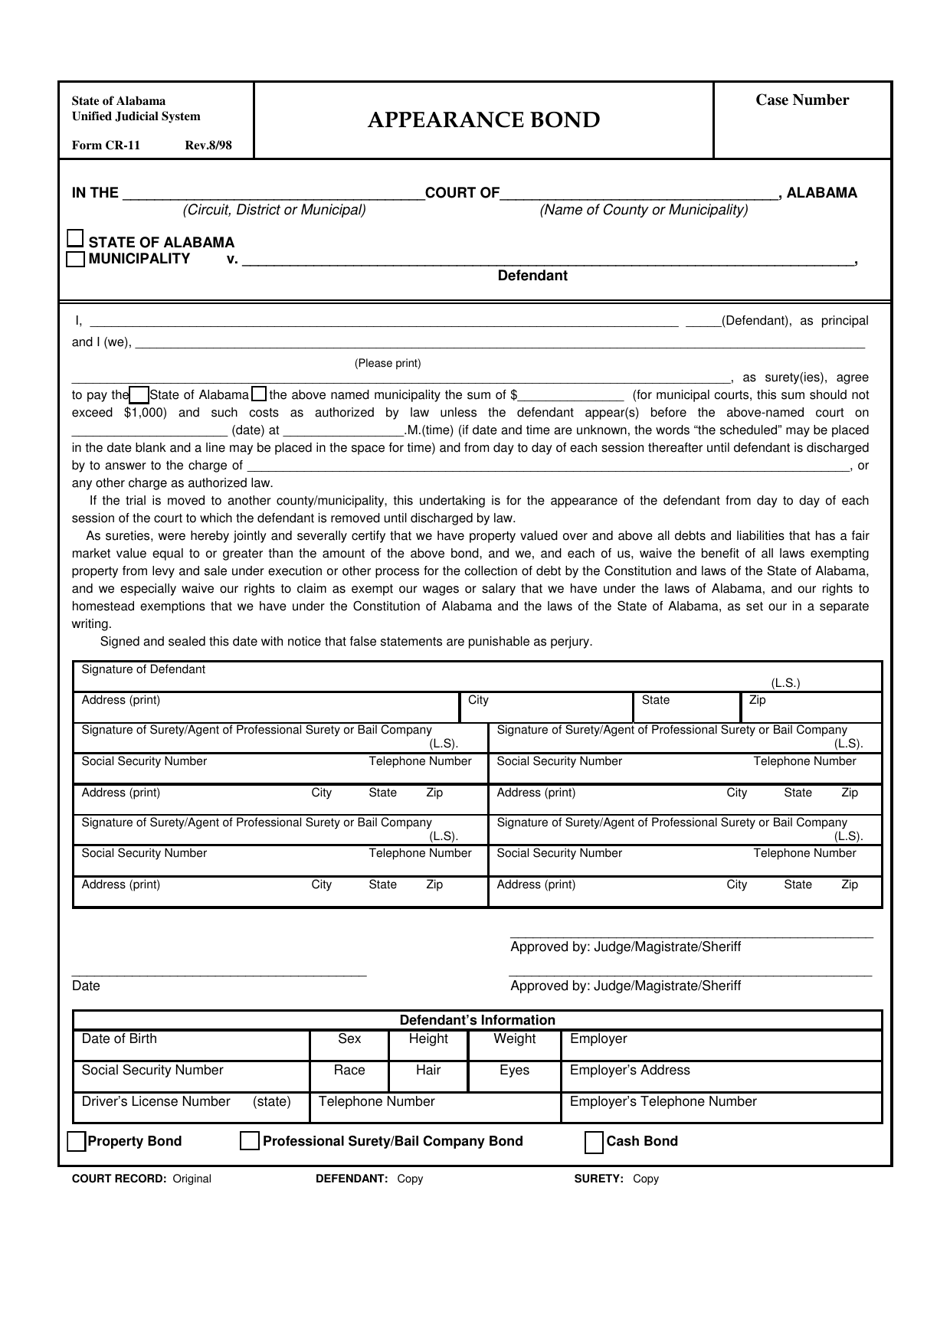 Form CR-11 Appearance Bond - Alabama, Page 1